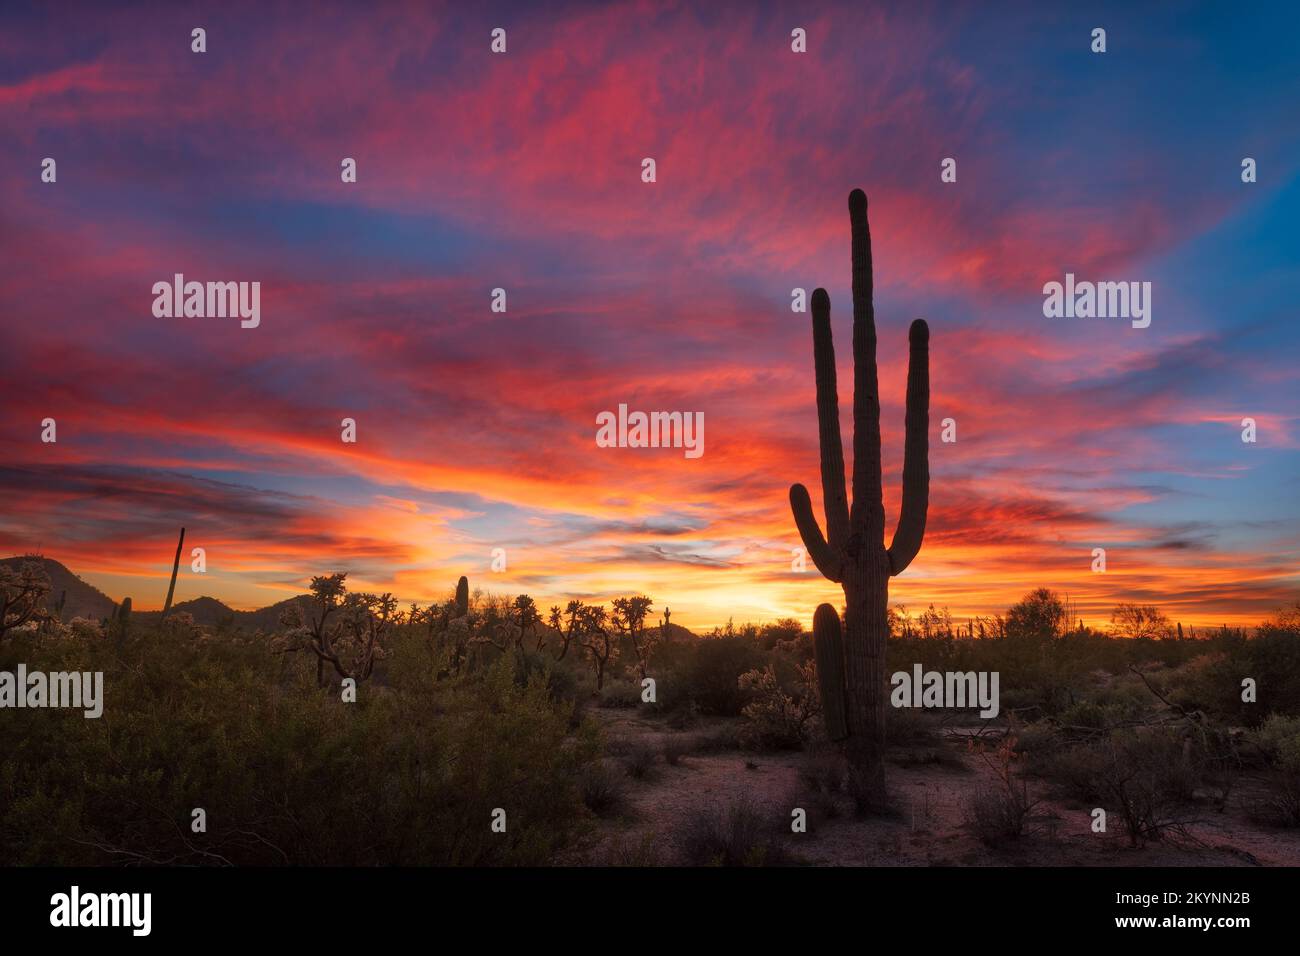 Saguaro cactus near phoenix hi-res stock photography and images - Alamy